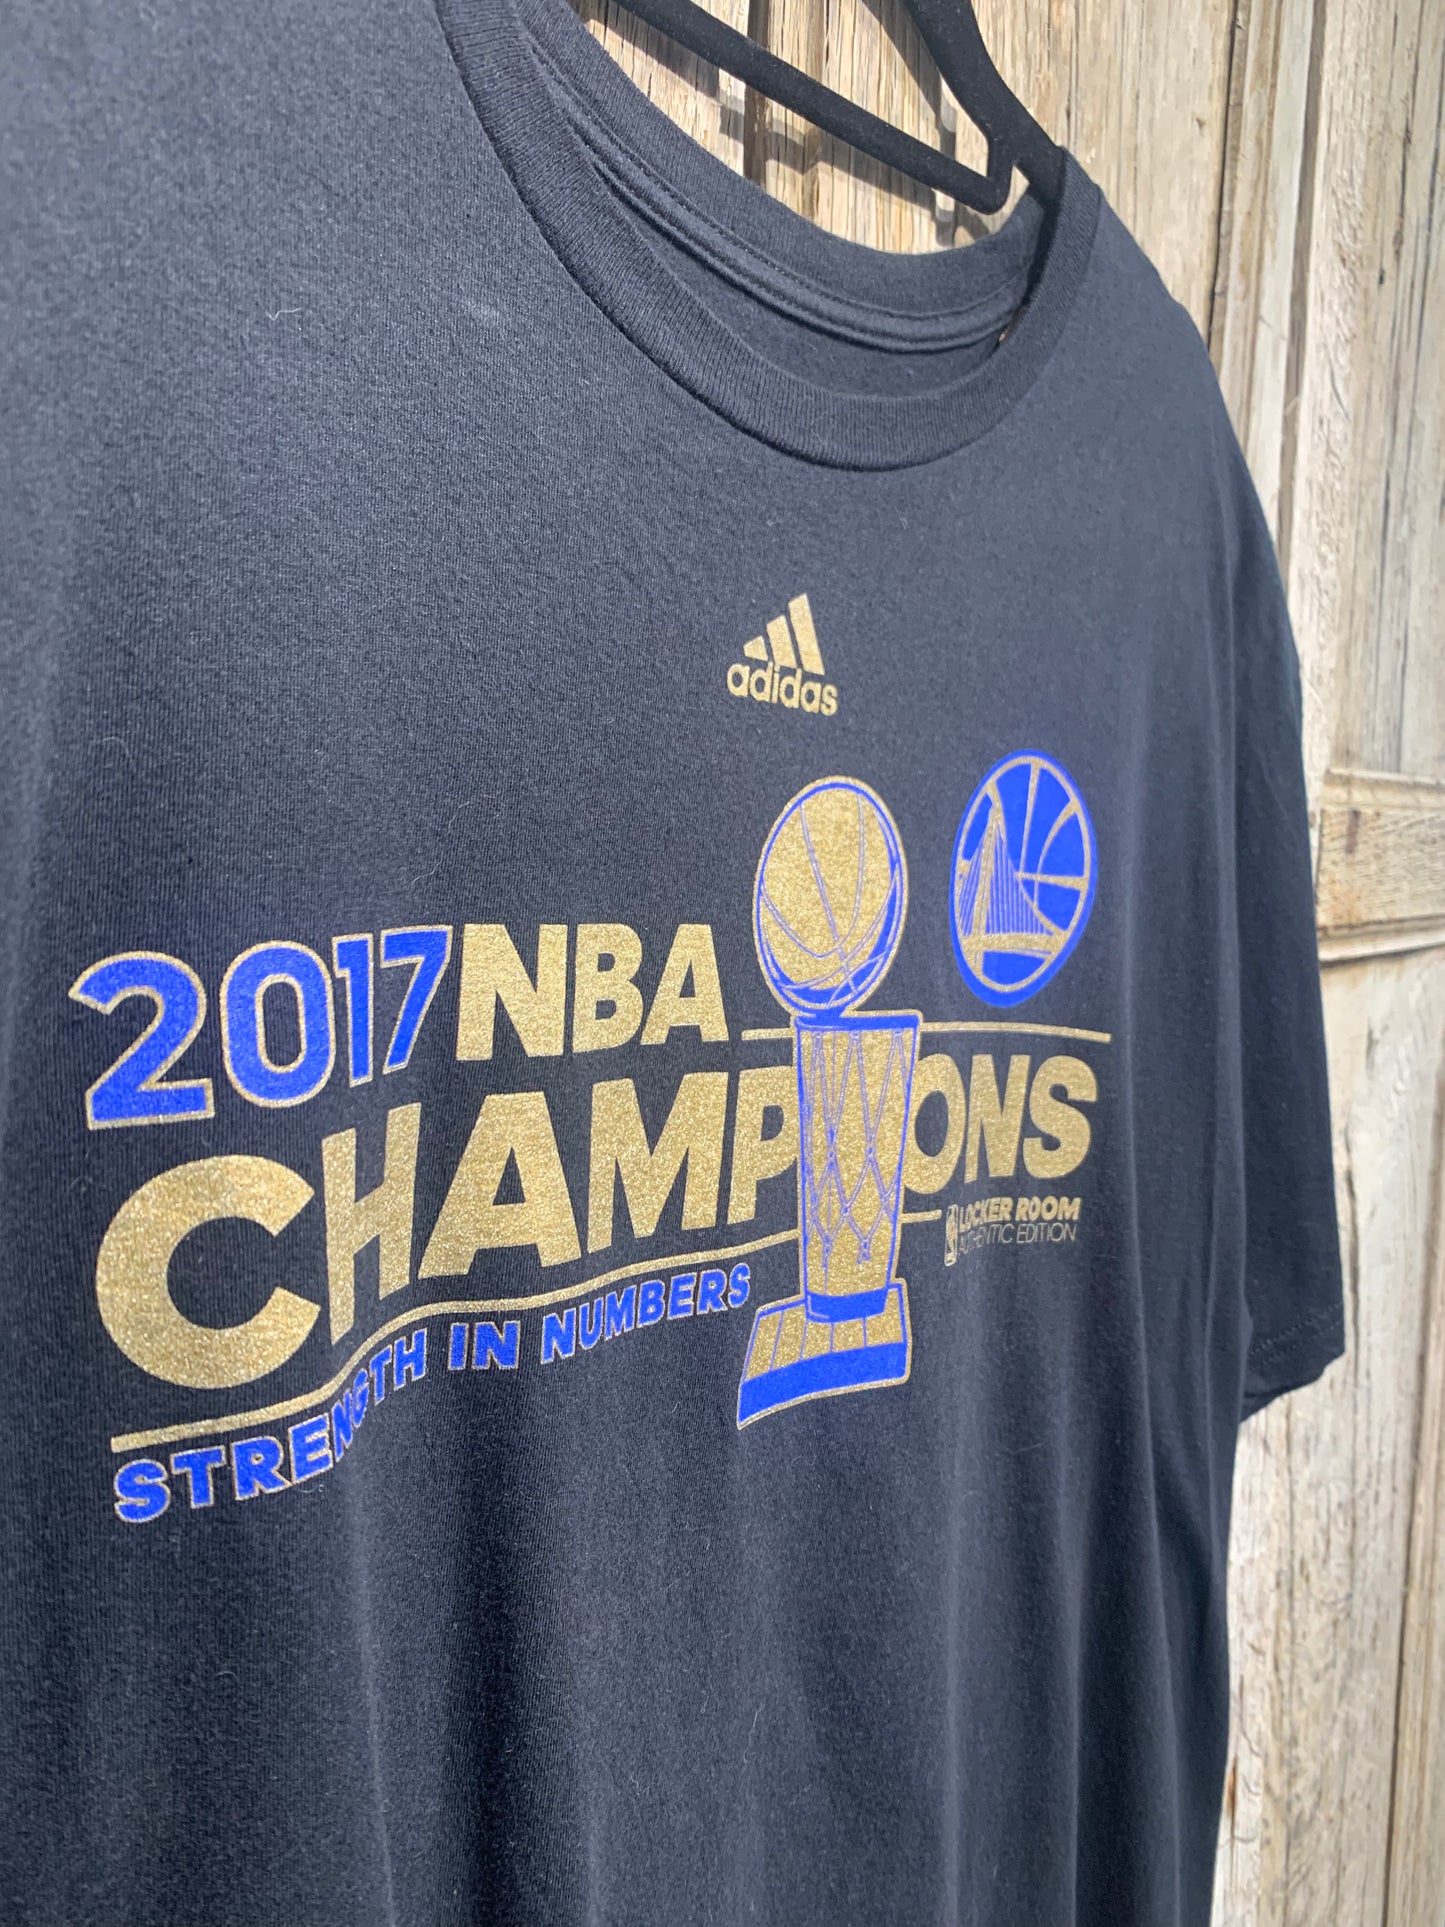 Adidas 2017 NBA Champions Graphic Tee